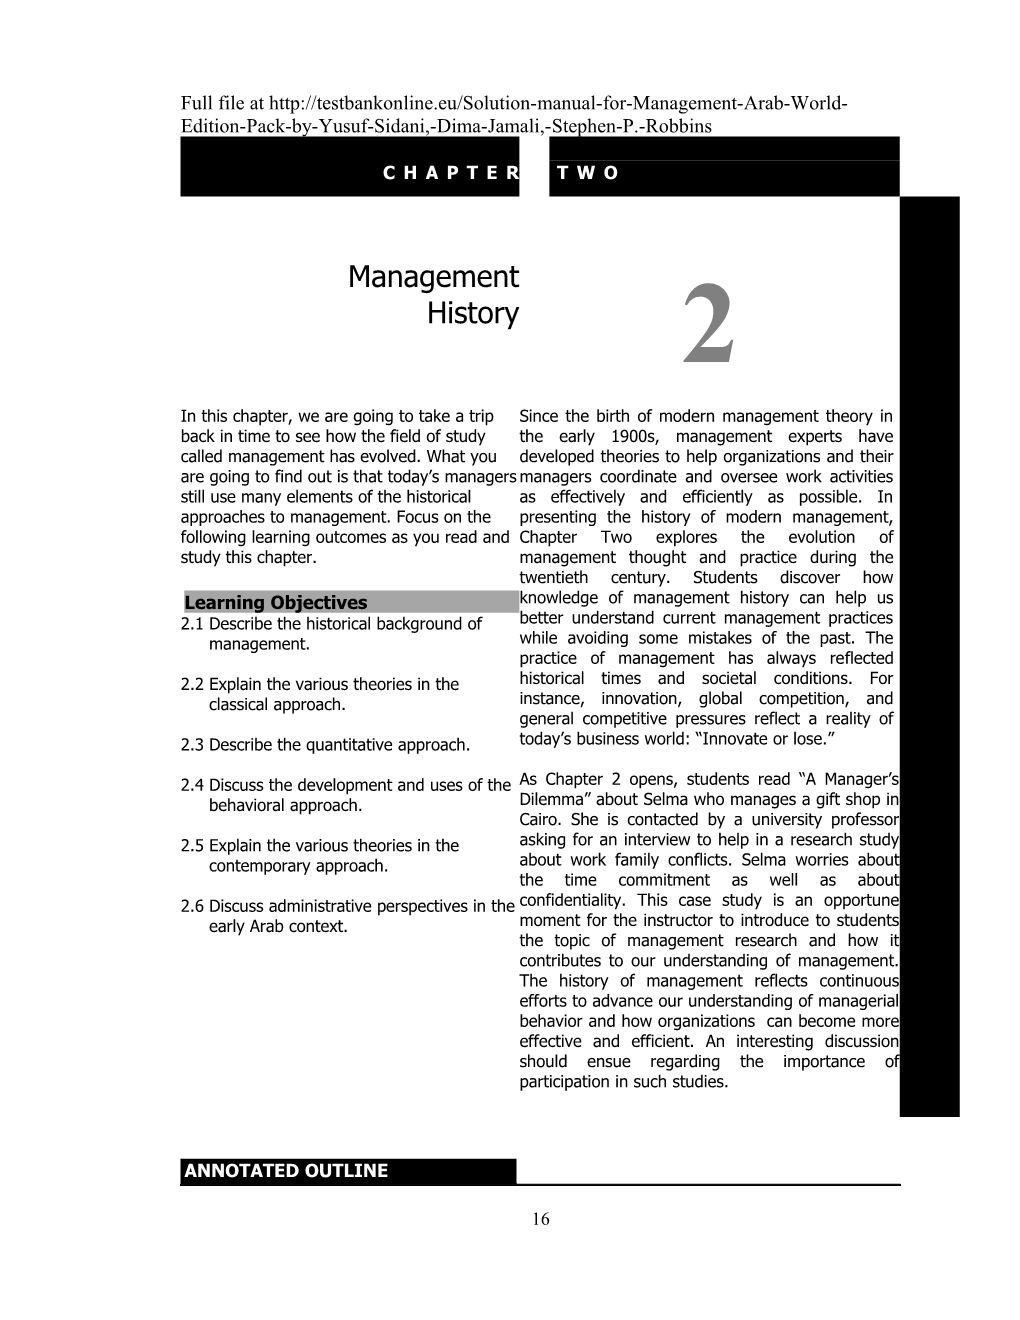 1.Historical Background of Management